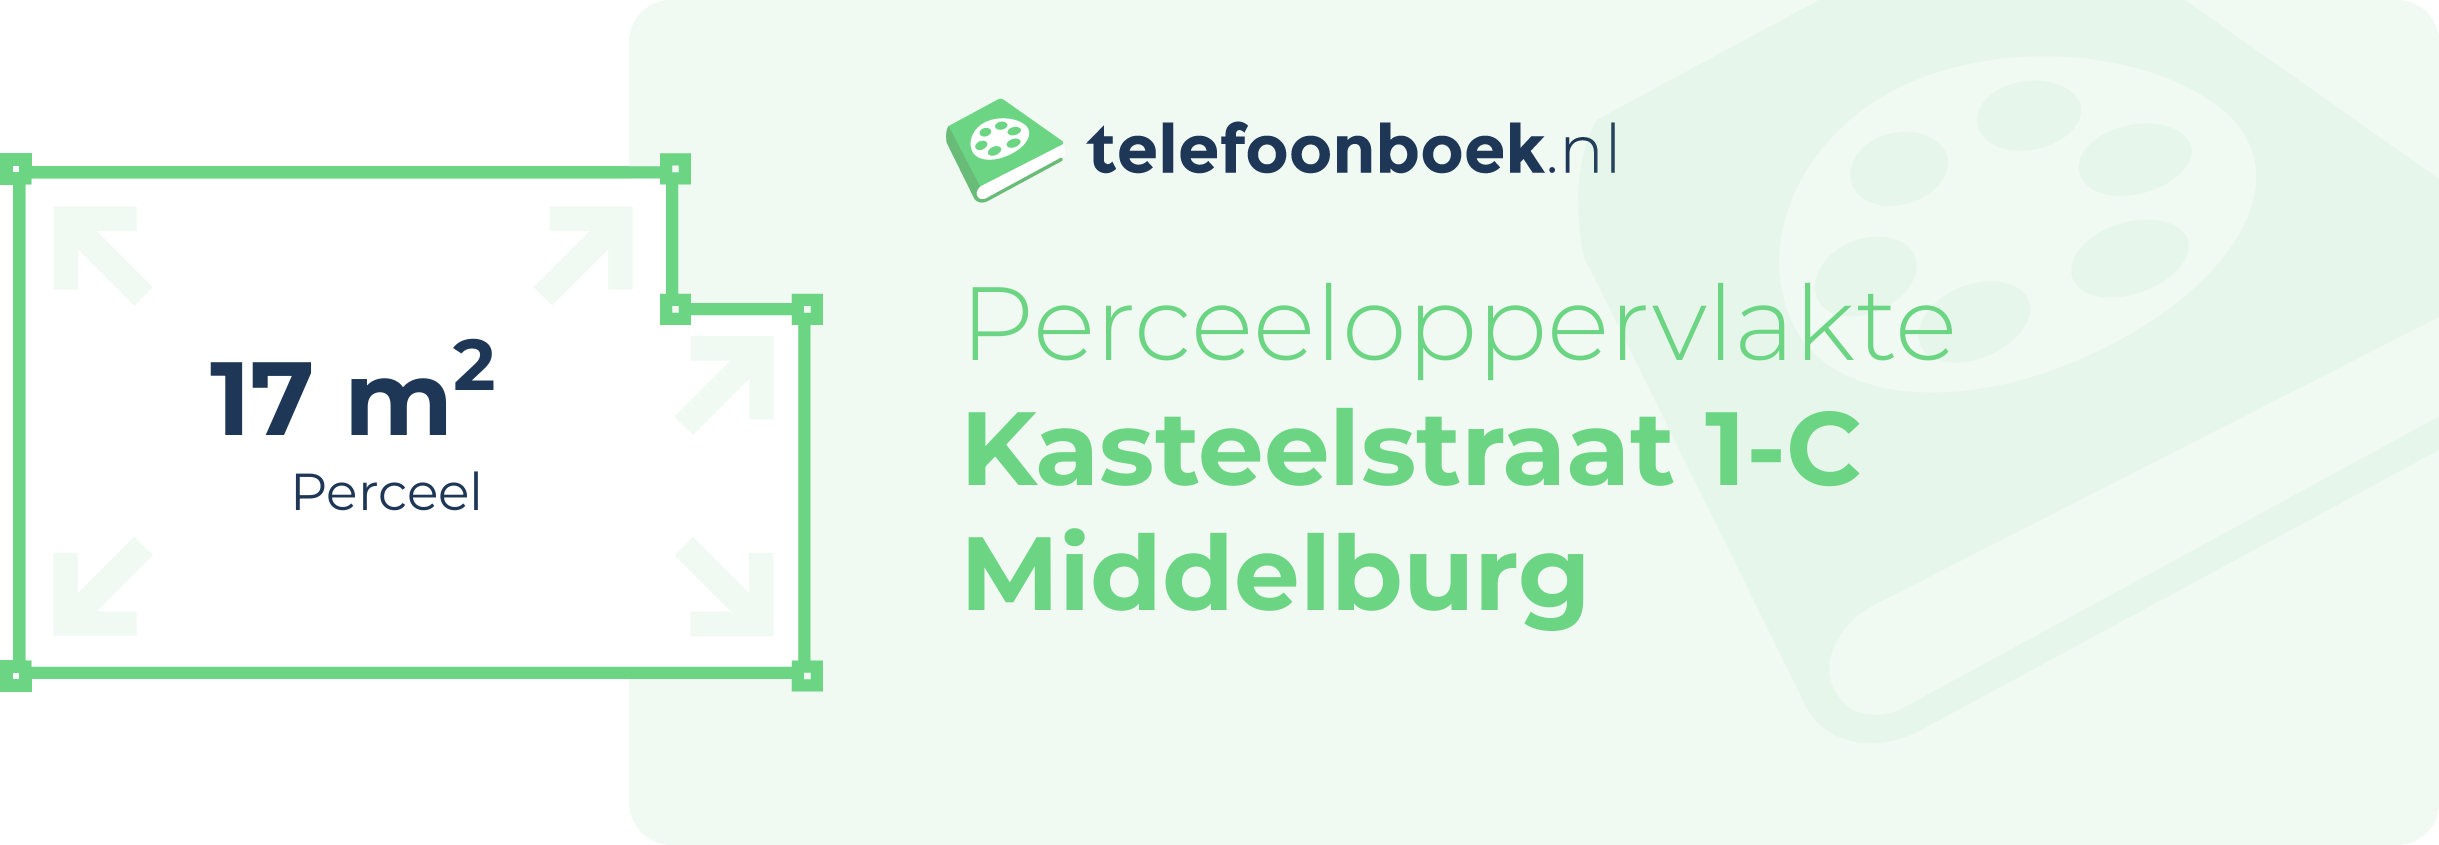 Perceeloppervlakte Kasteelstraat 1-C Middelburg